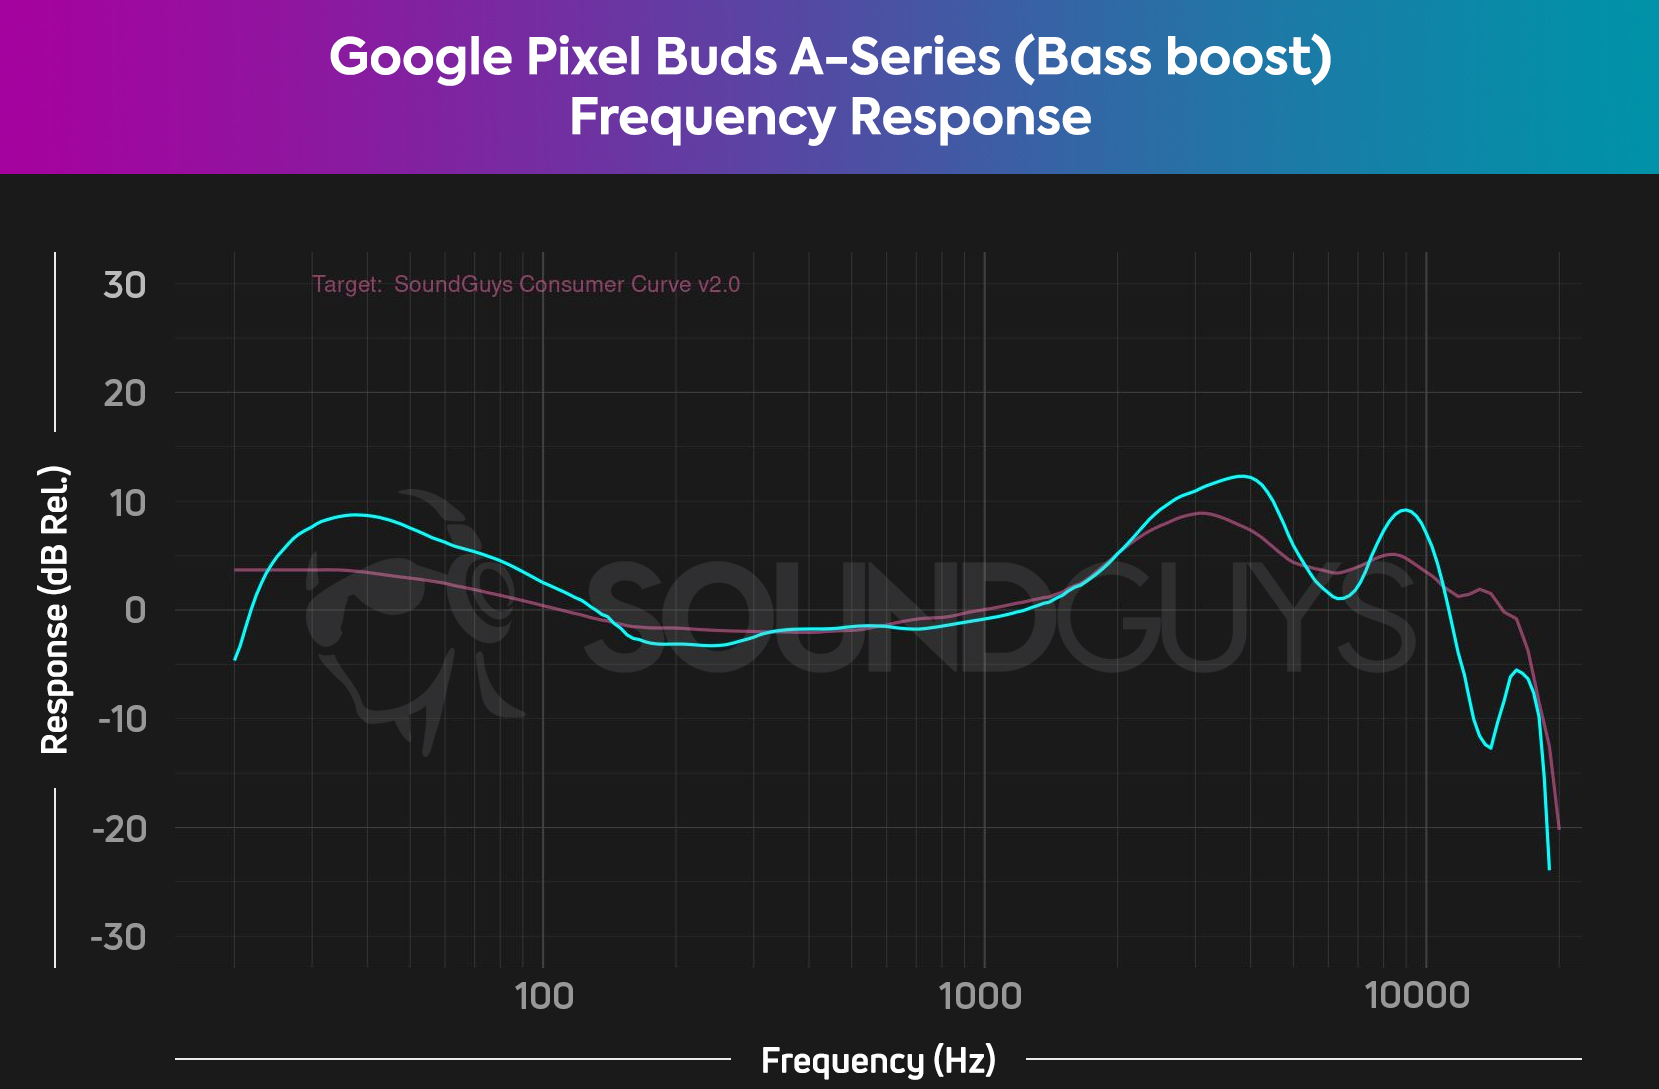 Google Pixel Buds A-Series True Wireless In-Ear Headphones Clearly White  GA02213-US - Best Buy